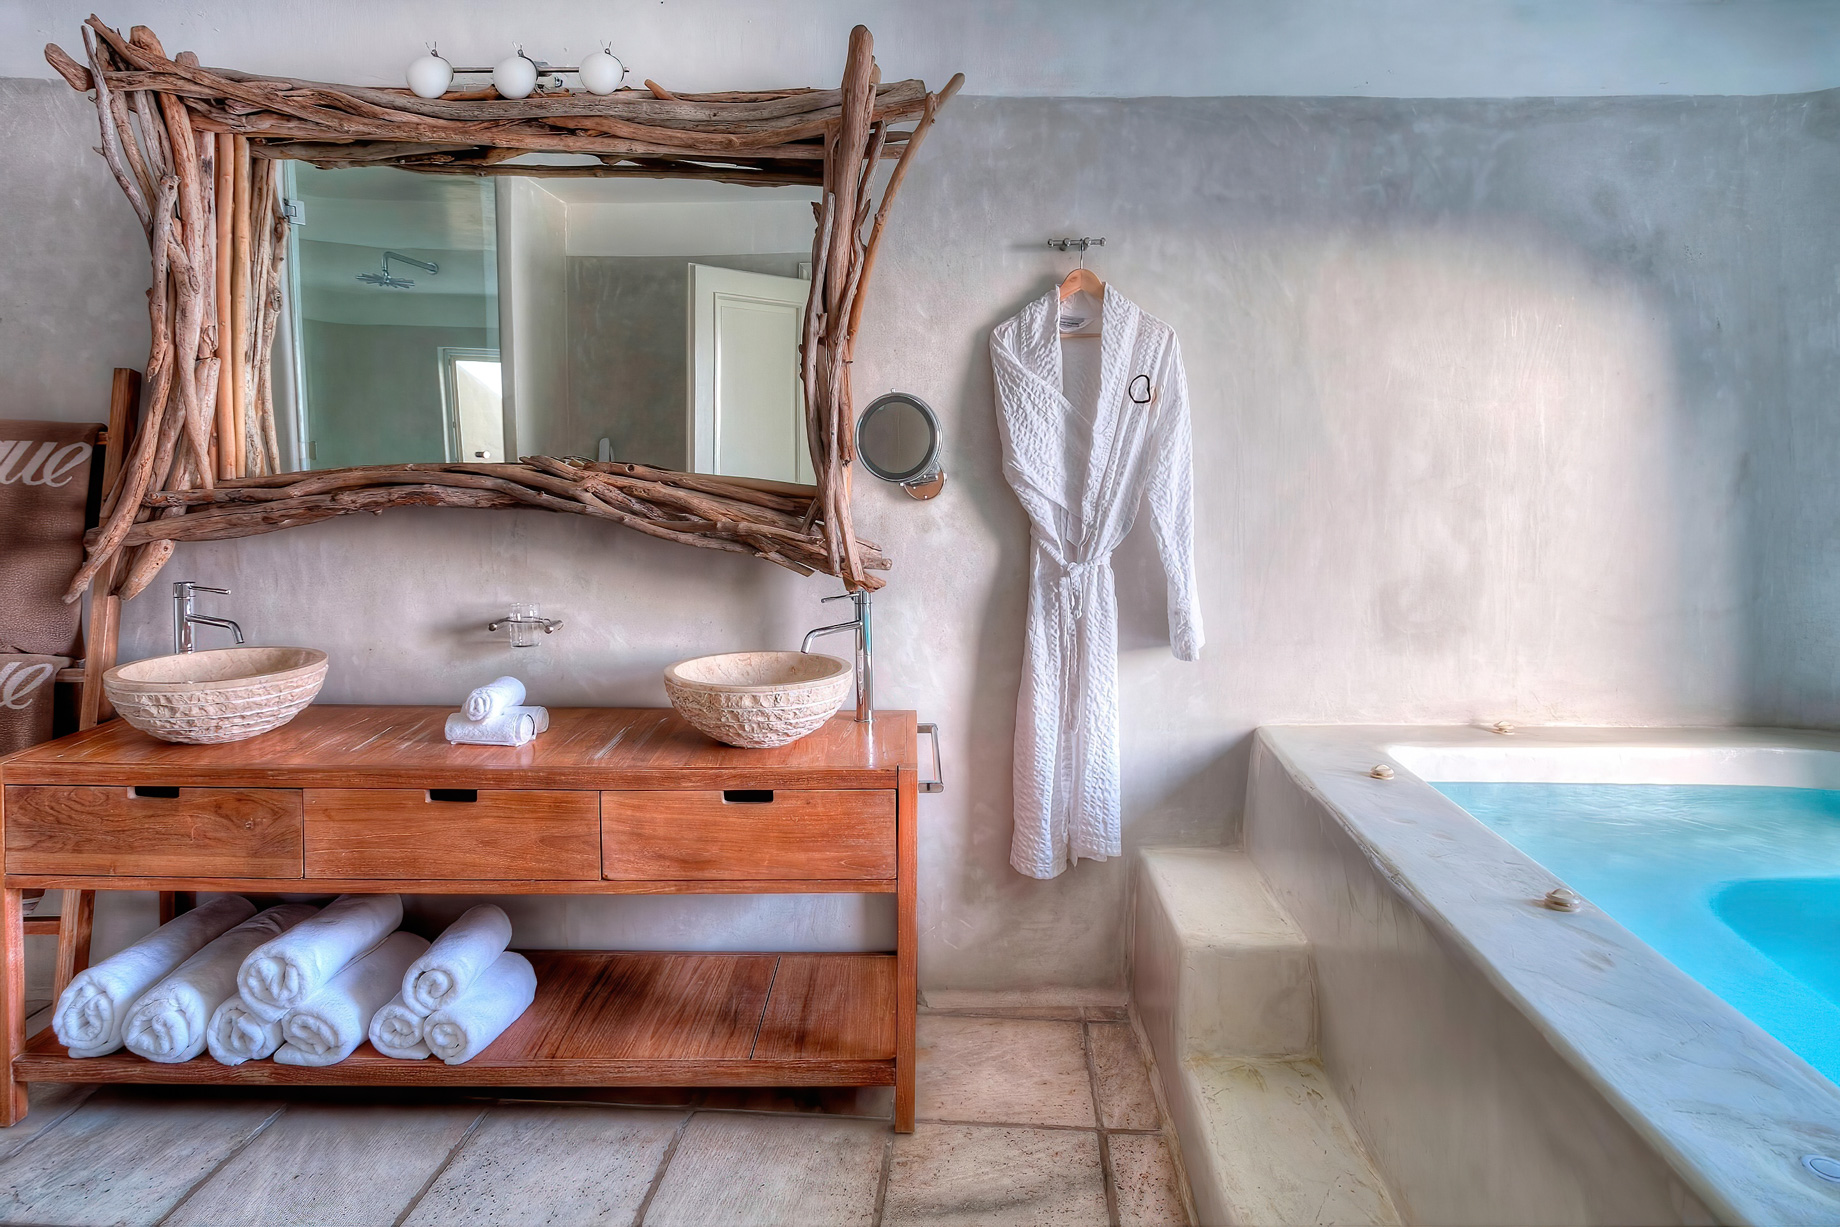 Mystique Hotel Santorini – Oia, Santorini Island, Greece – Villa Bathroom